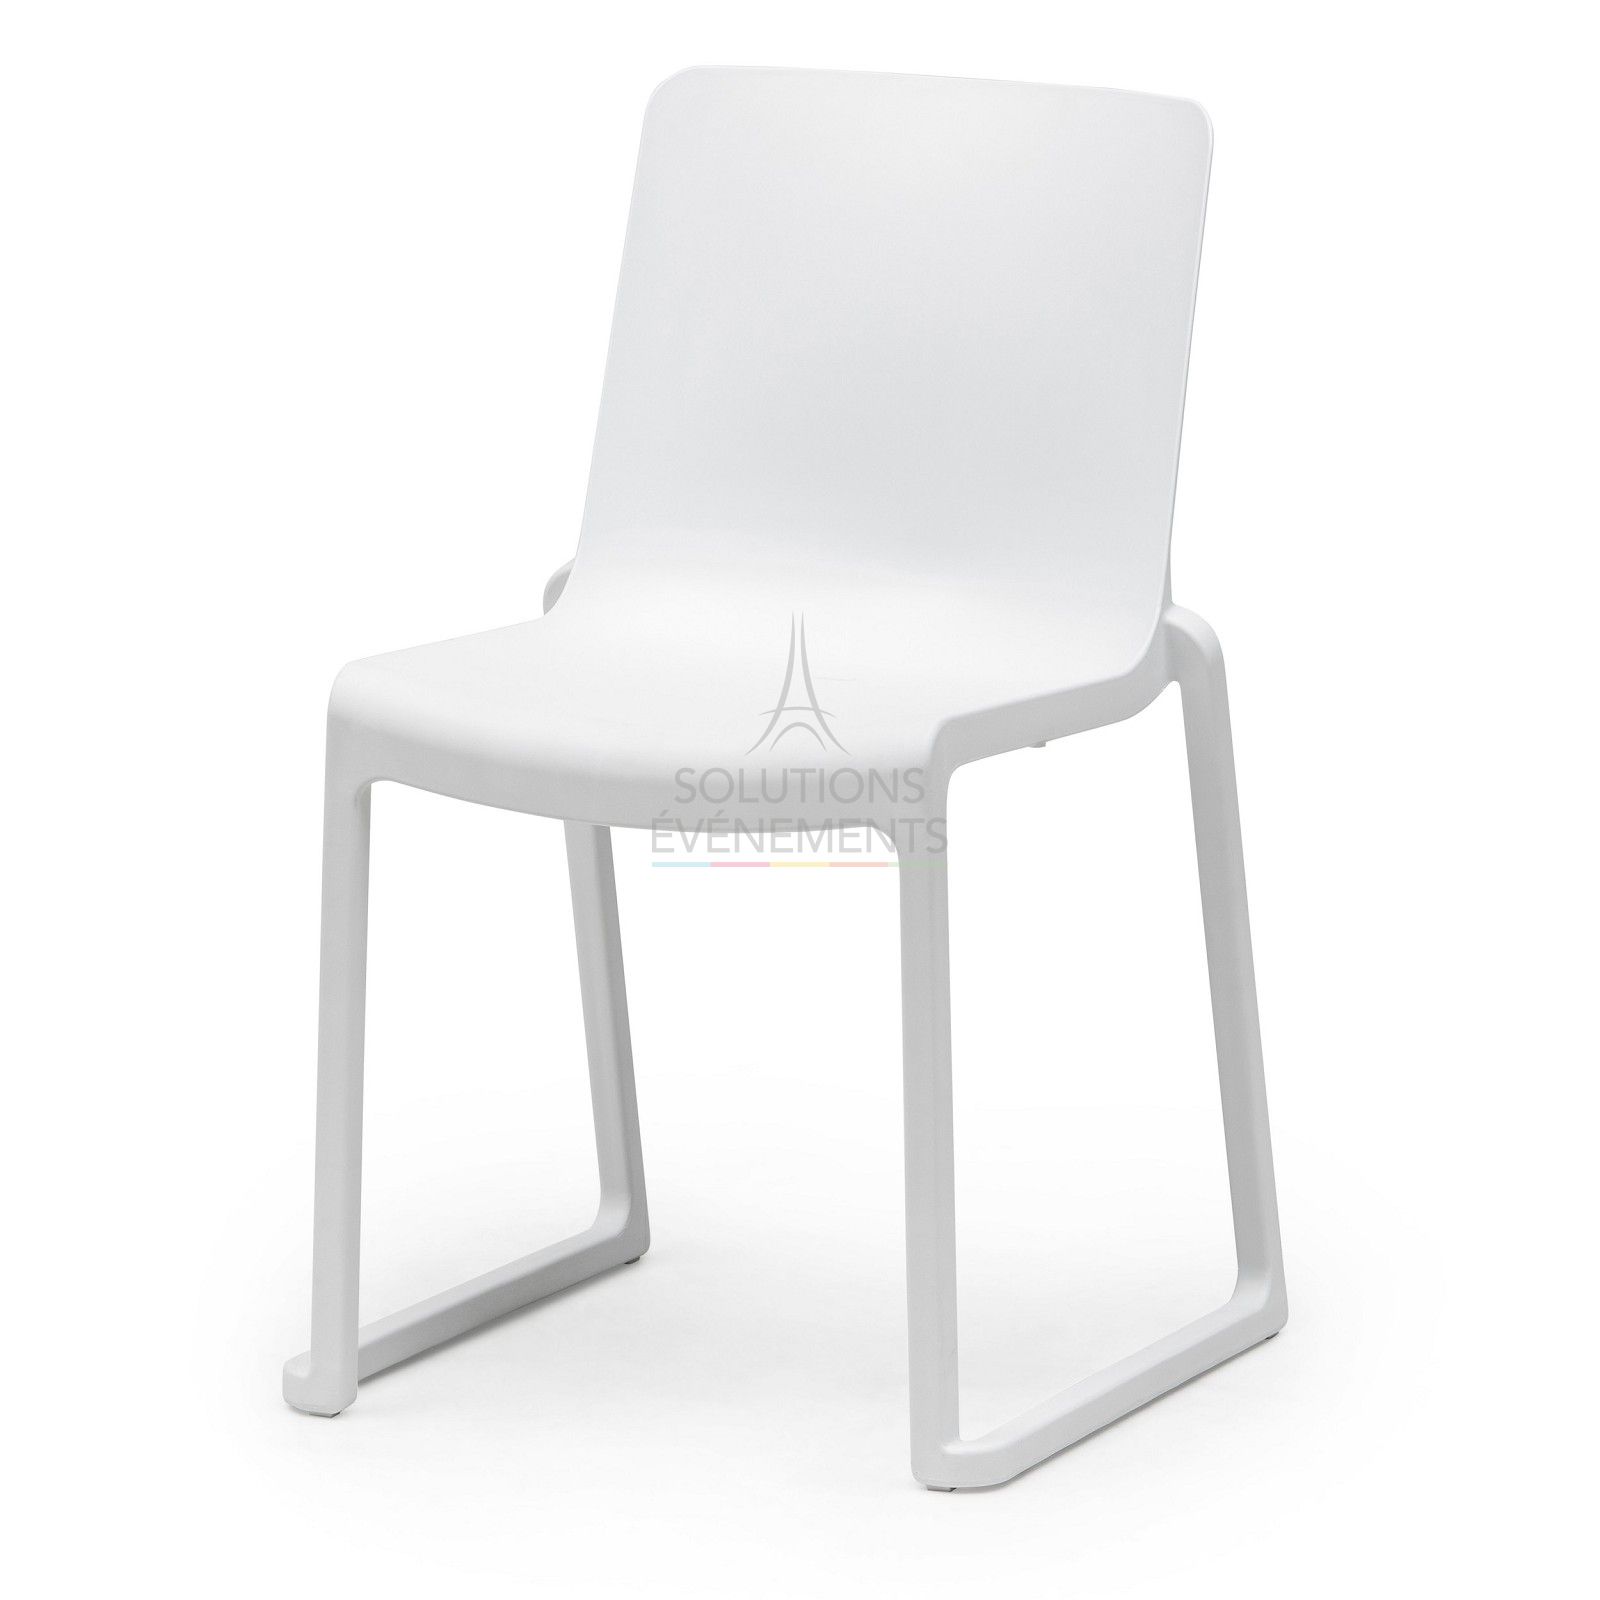 Eco-responsible white chair rental